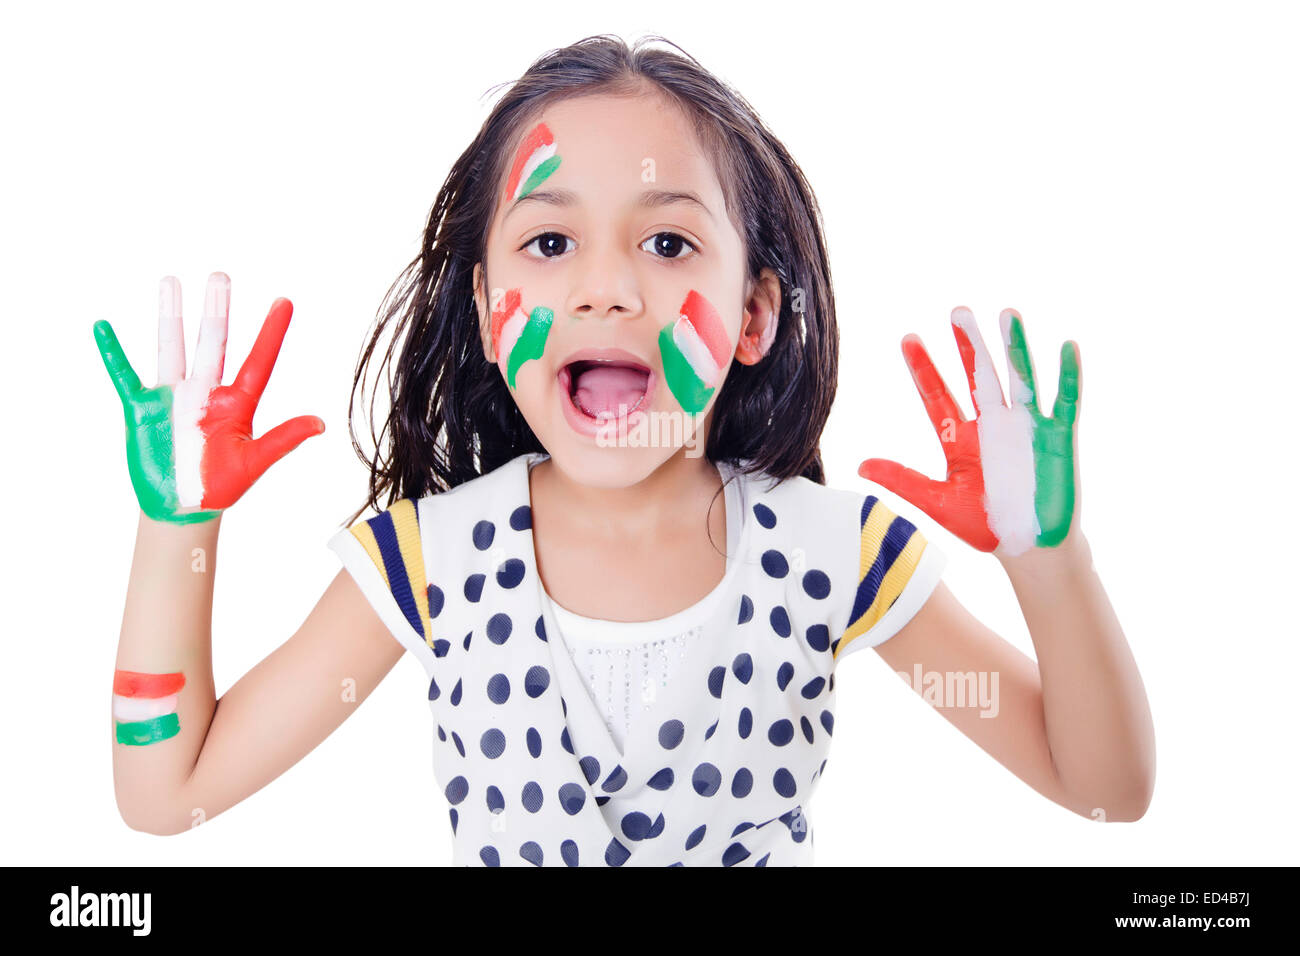 1 indian child enjoy Independence day Stock Photo